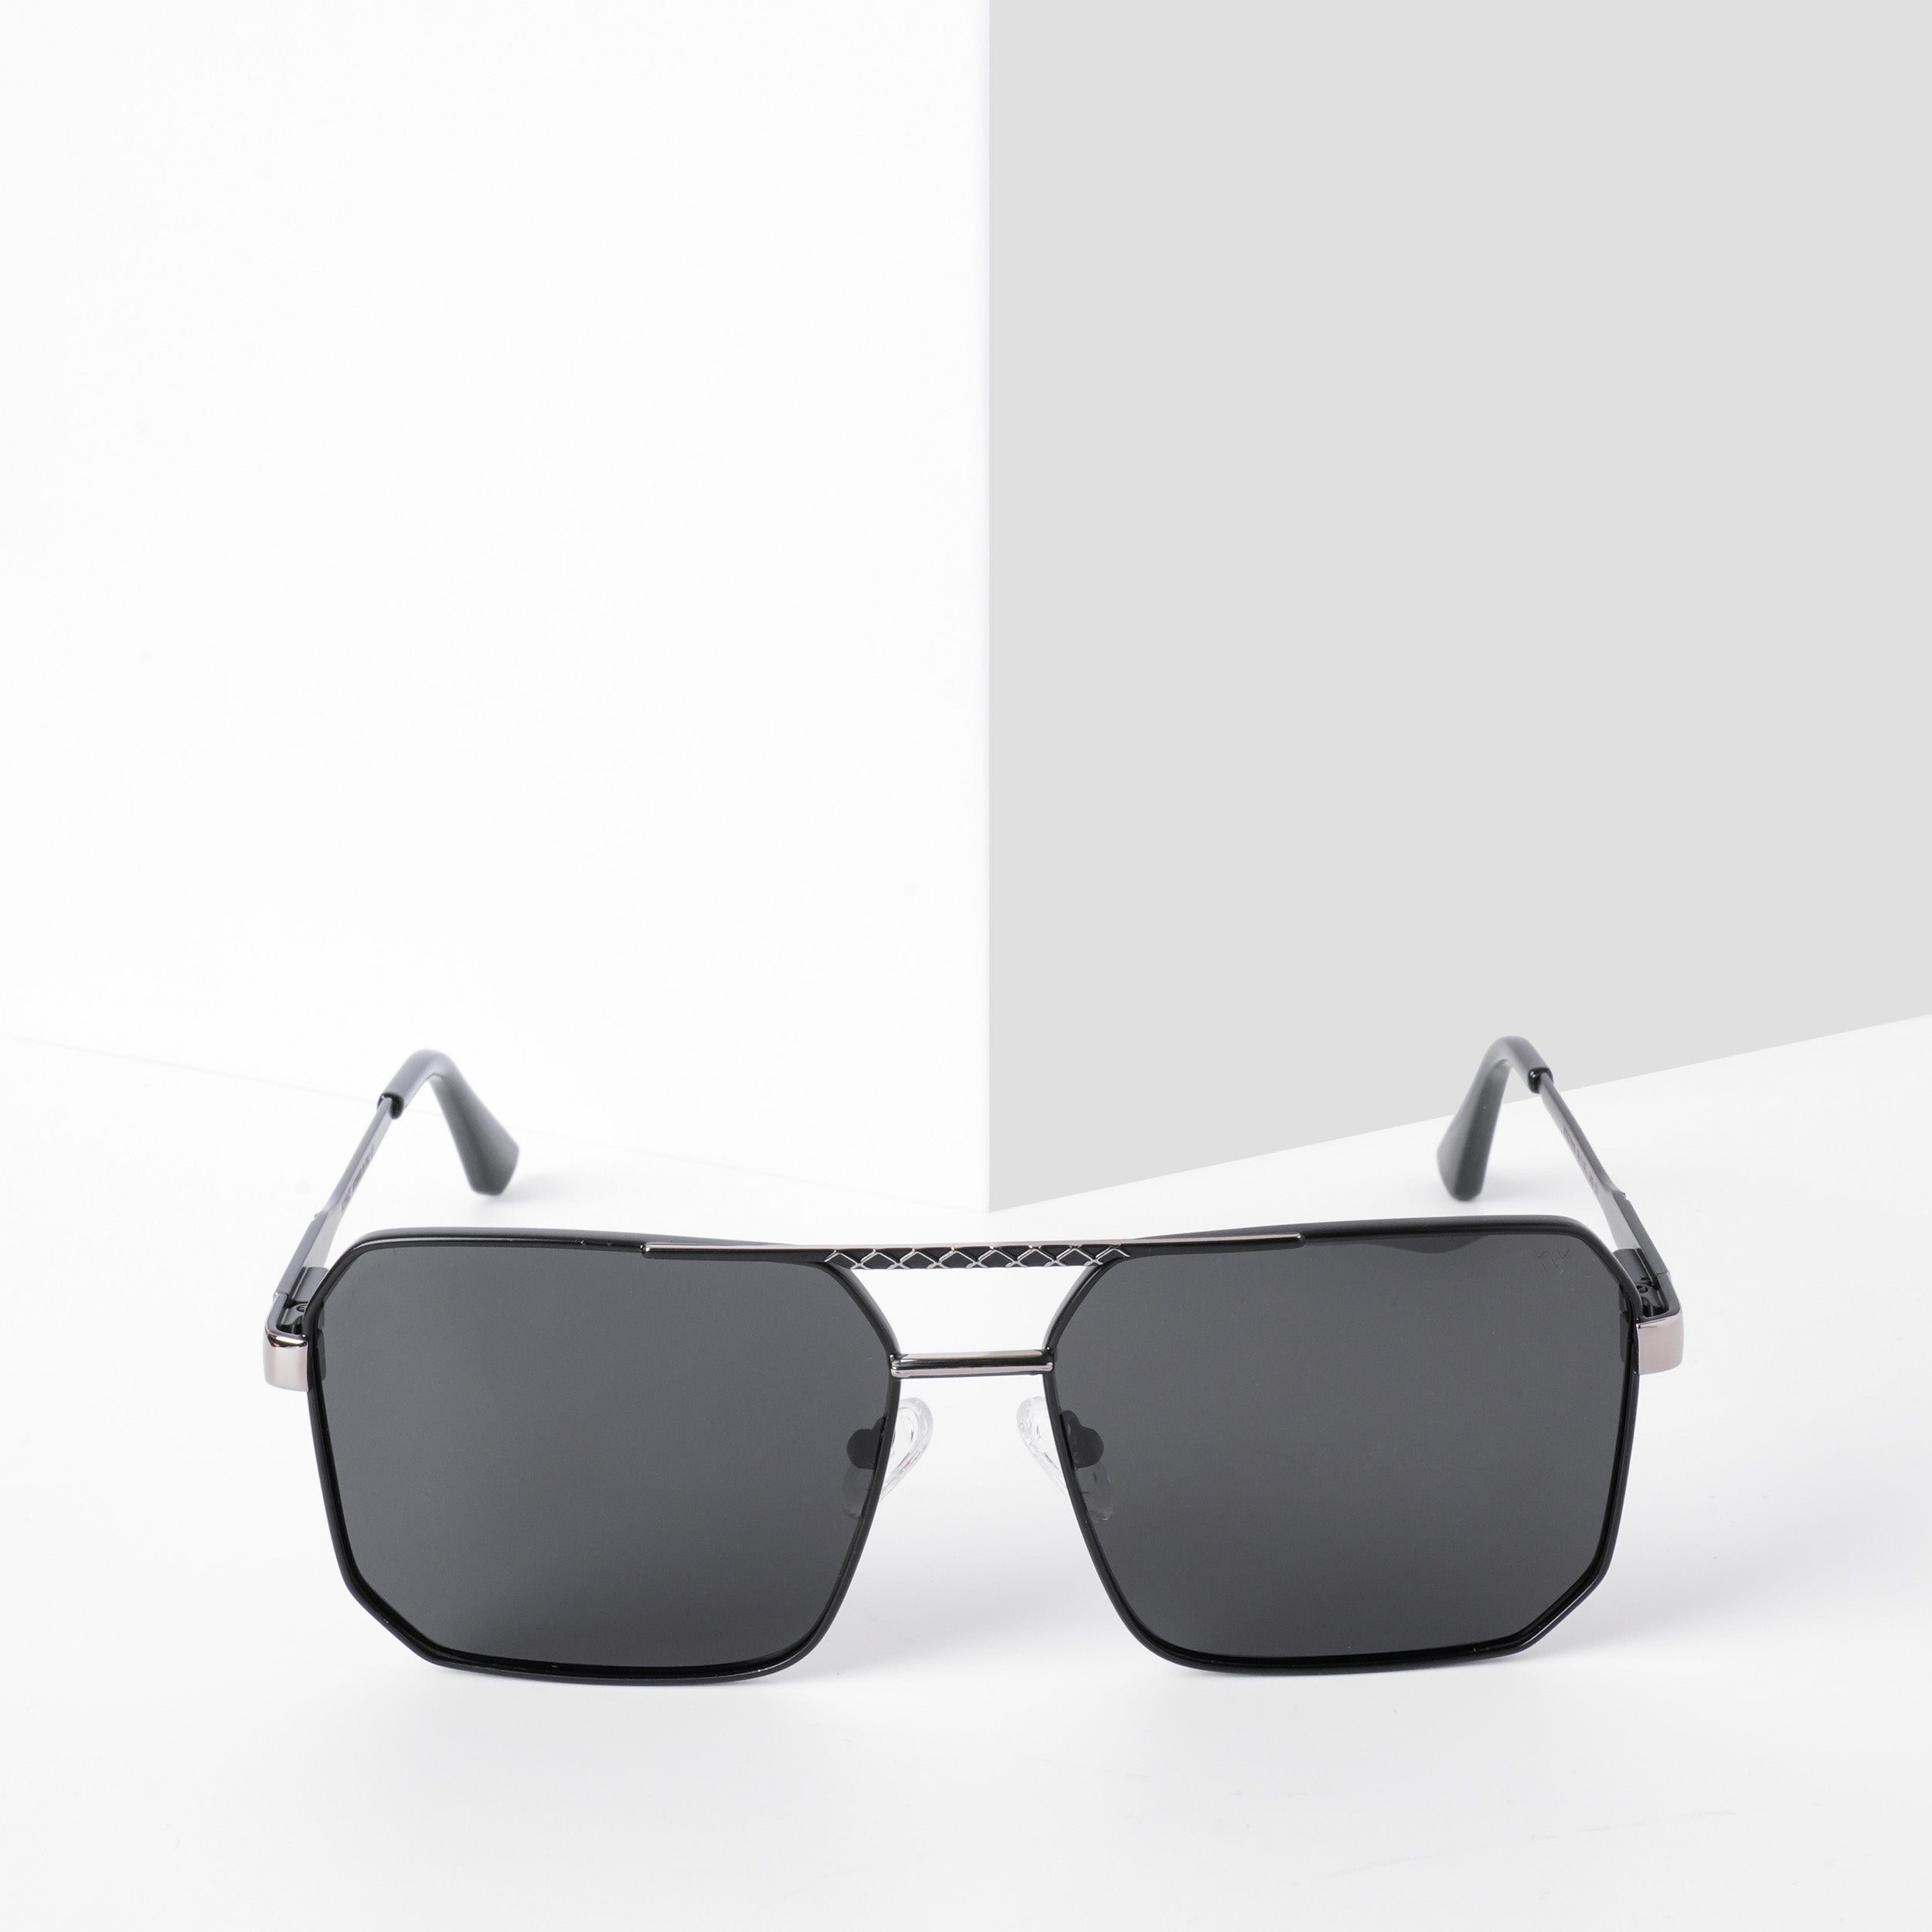 Voyage Exclusive Wayfarer Polarized Sunglasses for Men & Women (Black Lens | Black & Grey Frame - PMG5300)